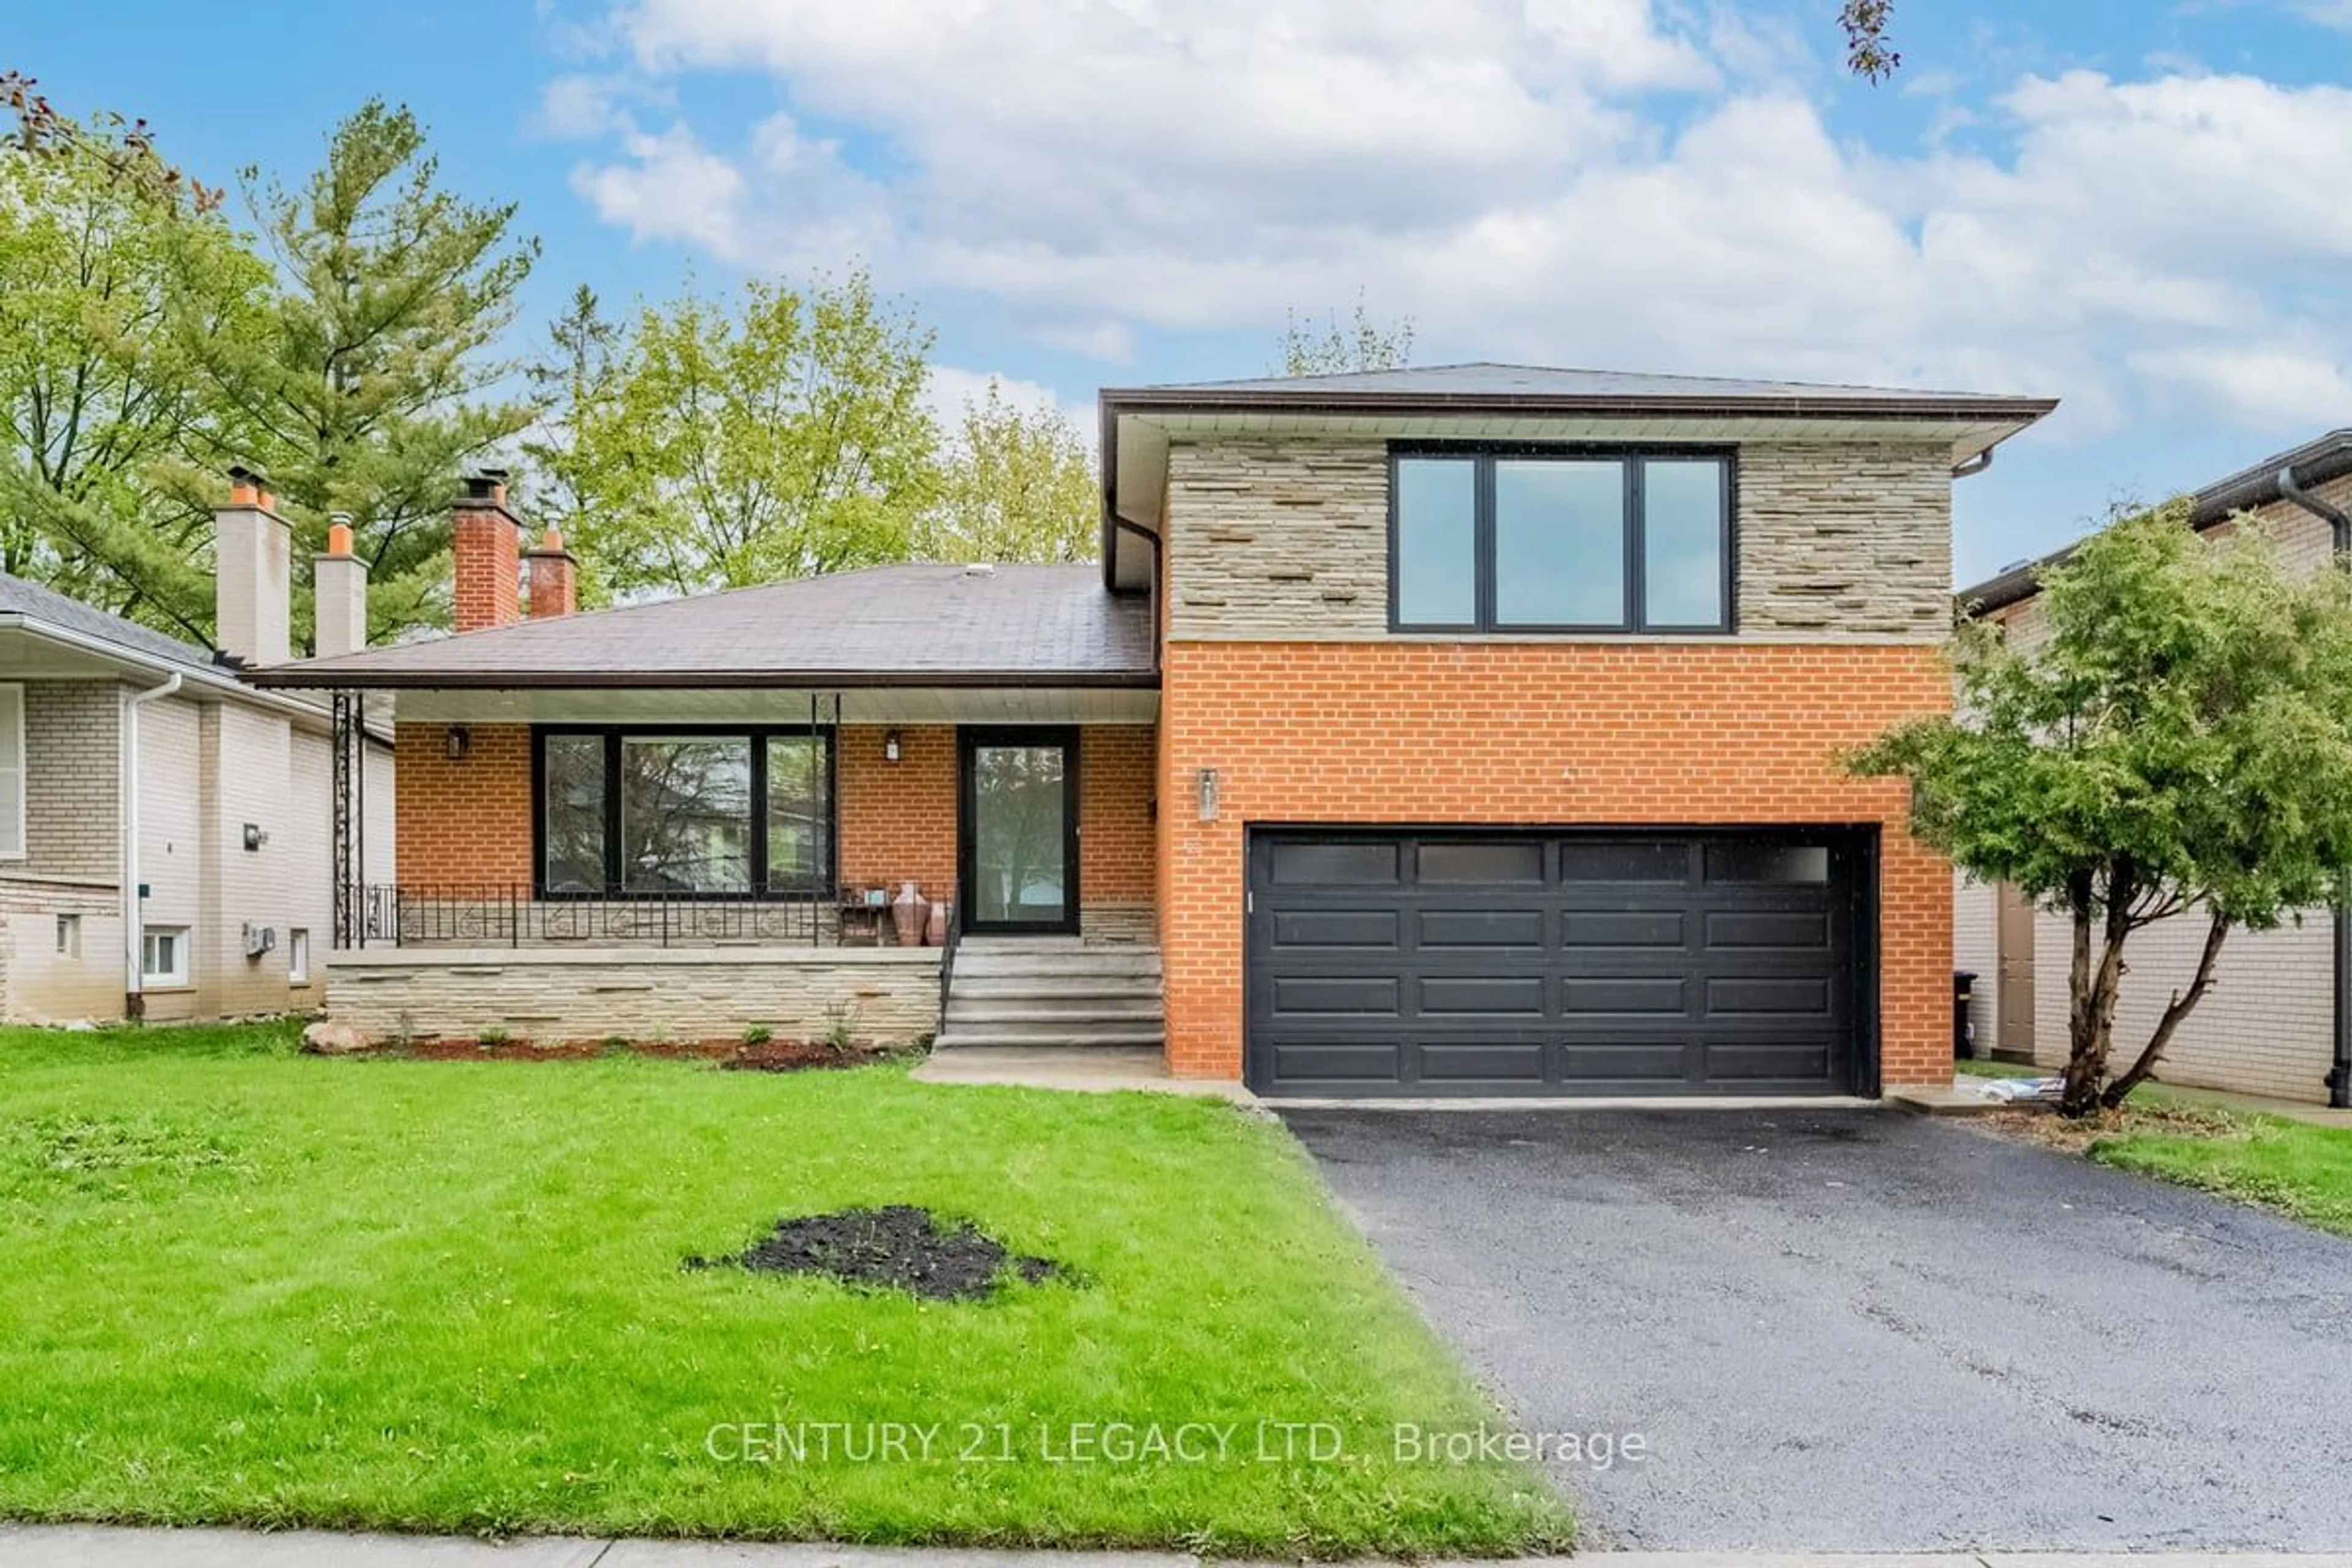 Home with brick exterior material for 22 Shortland Cres, Toronto Ontario M9R 2T3